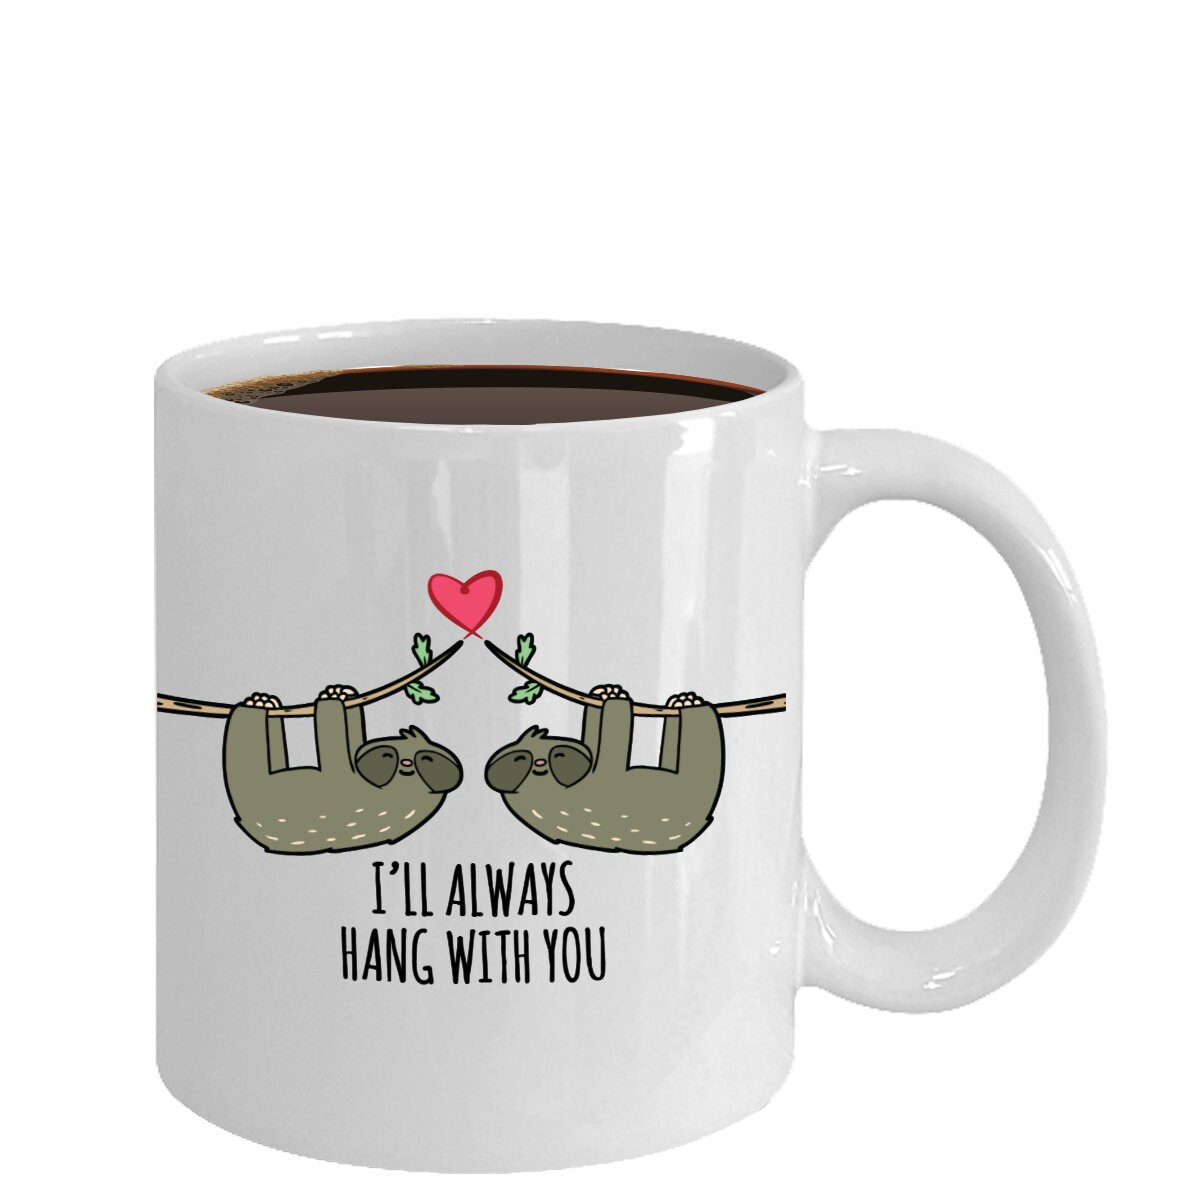 Personalised Valentines Mug gift I love hanging with you animal lover mug cute Sloth love mug Anniversary gift for girlfriend best friend